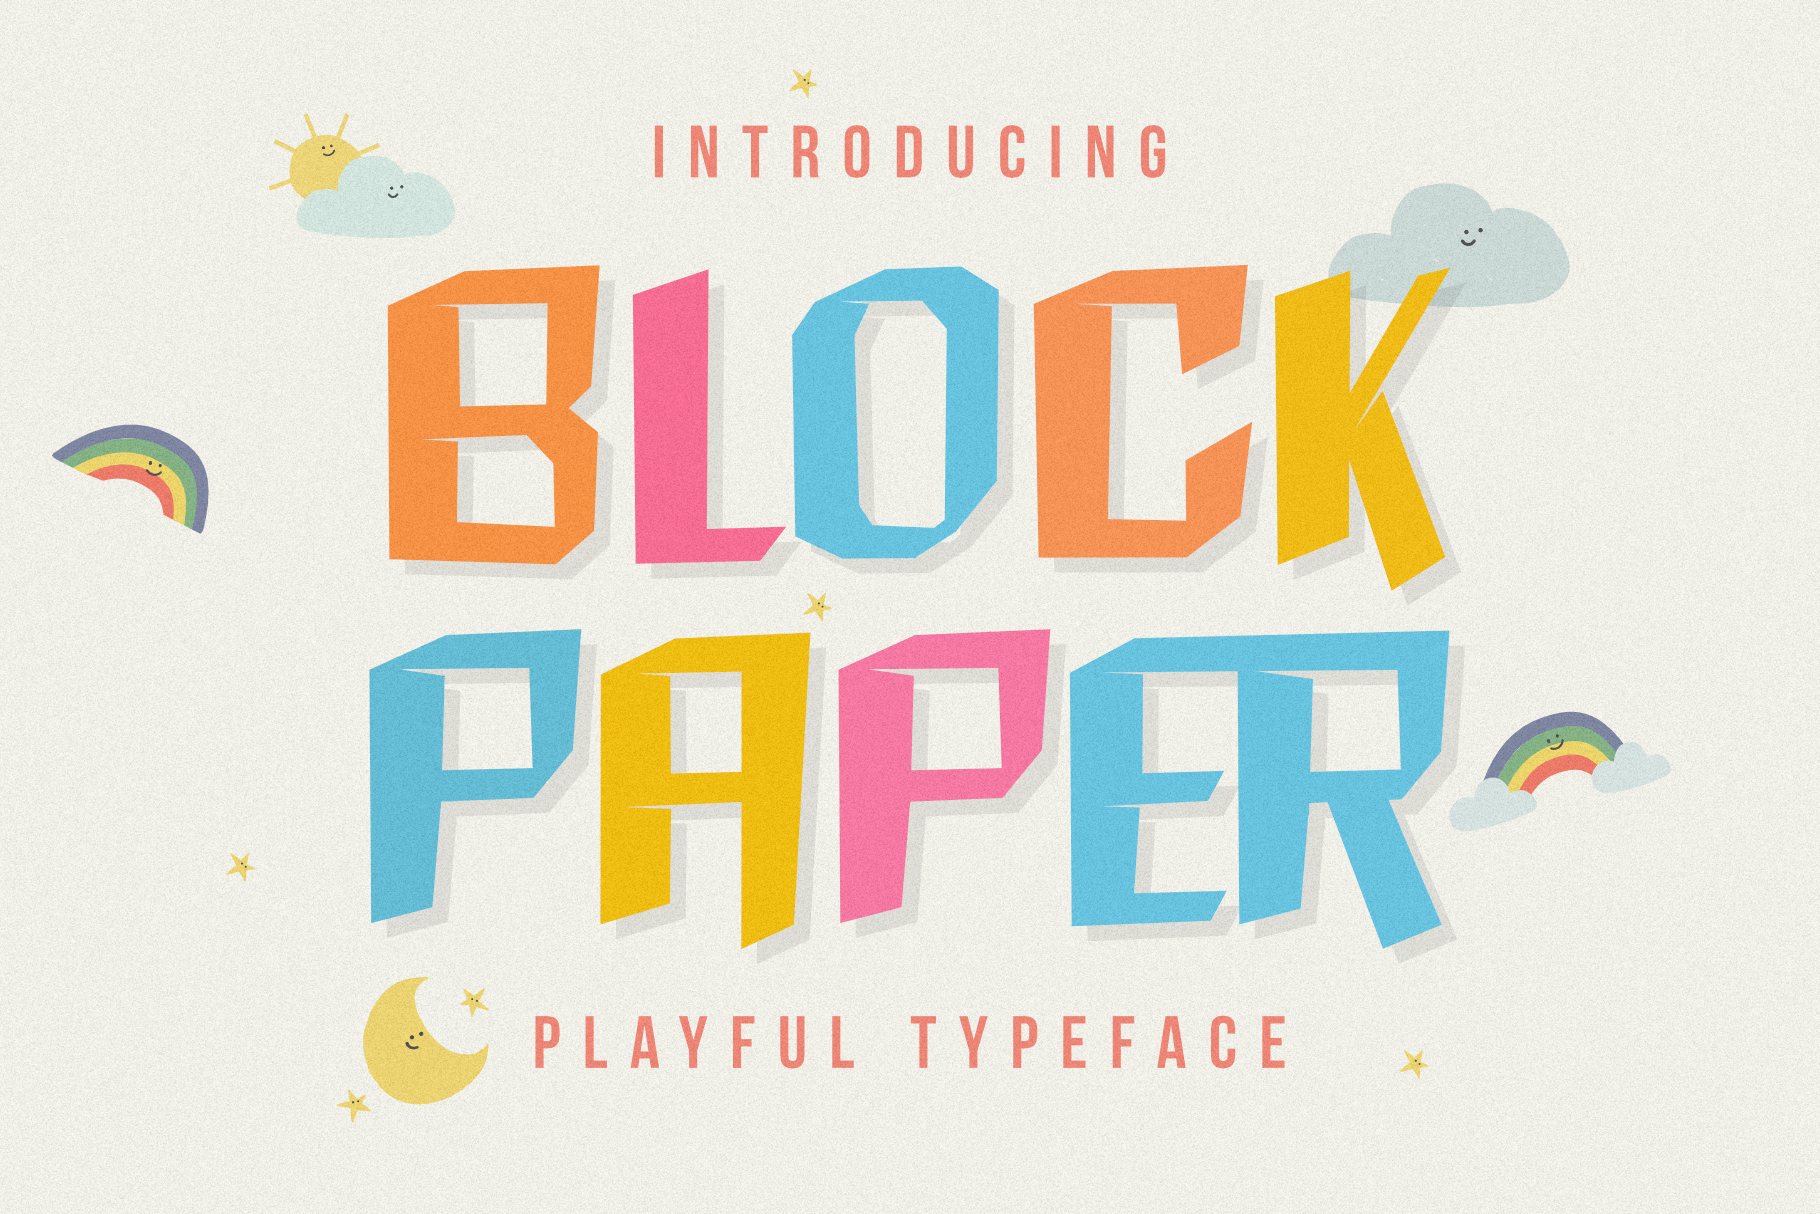 Block Paper